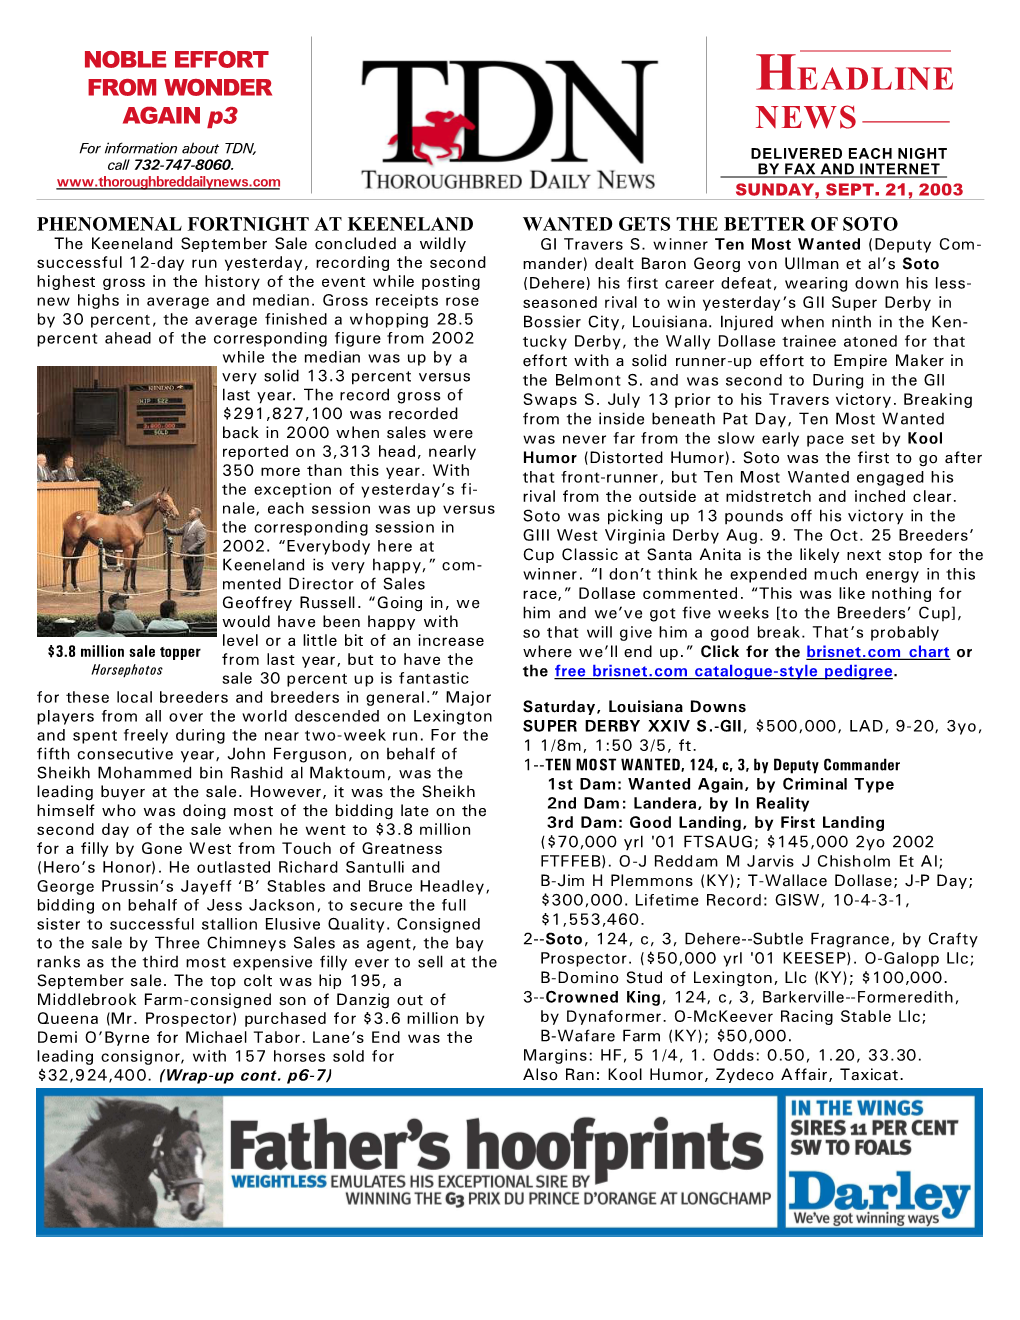 HEADLINE NEWS • 9/21/03 • PAGE 2 of 7